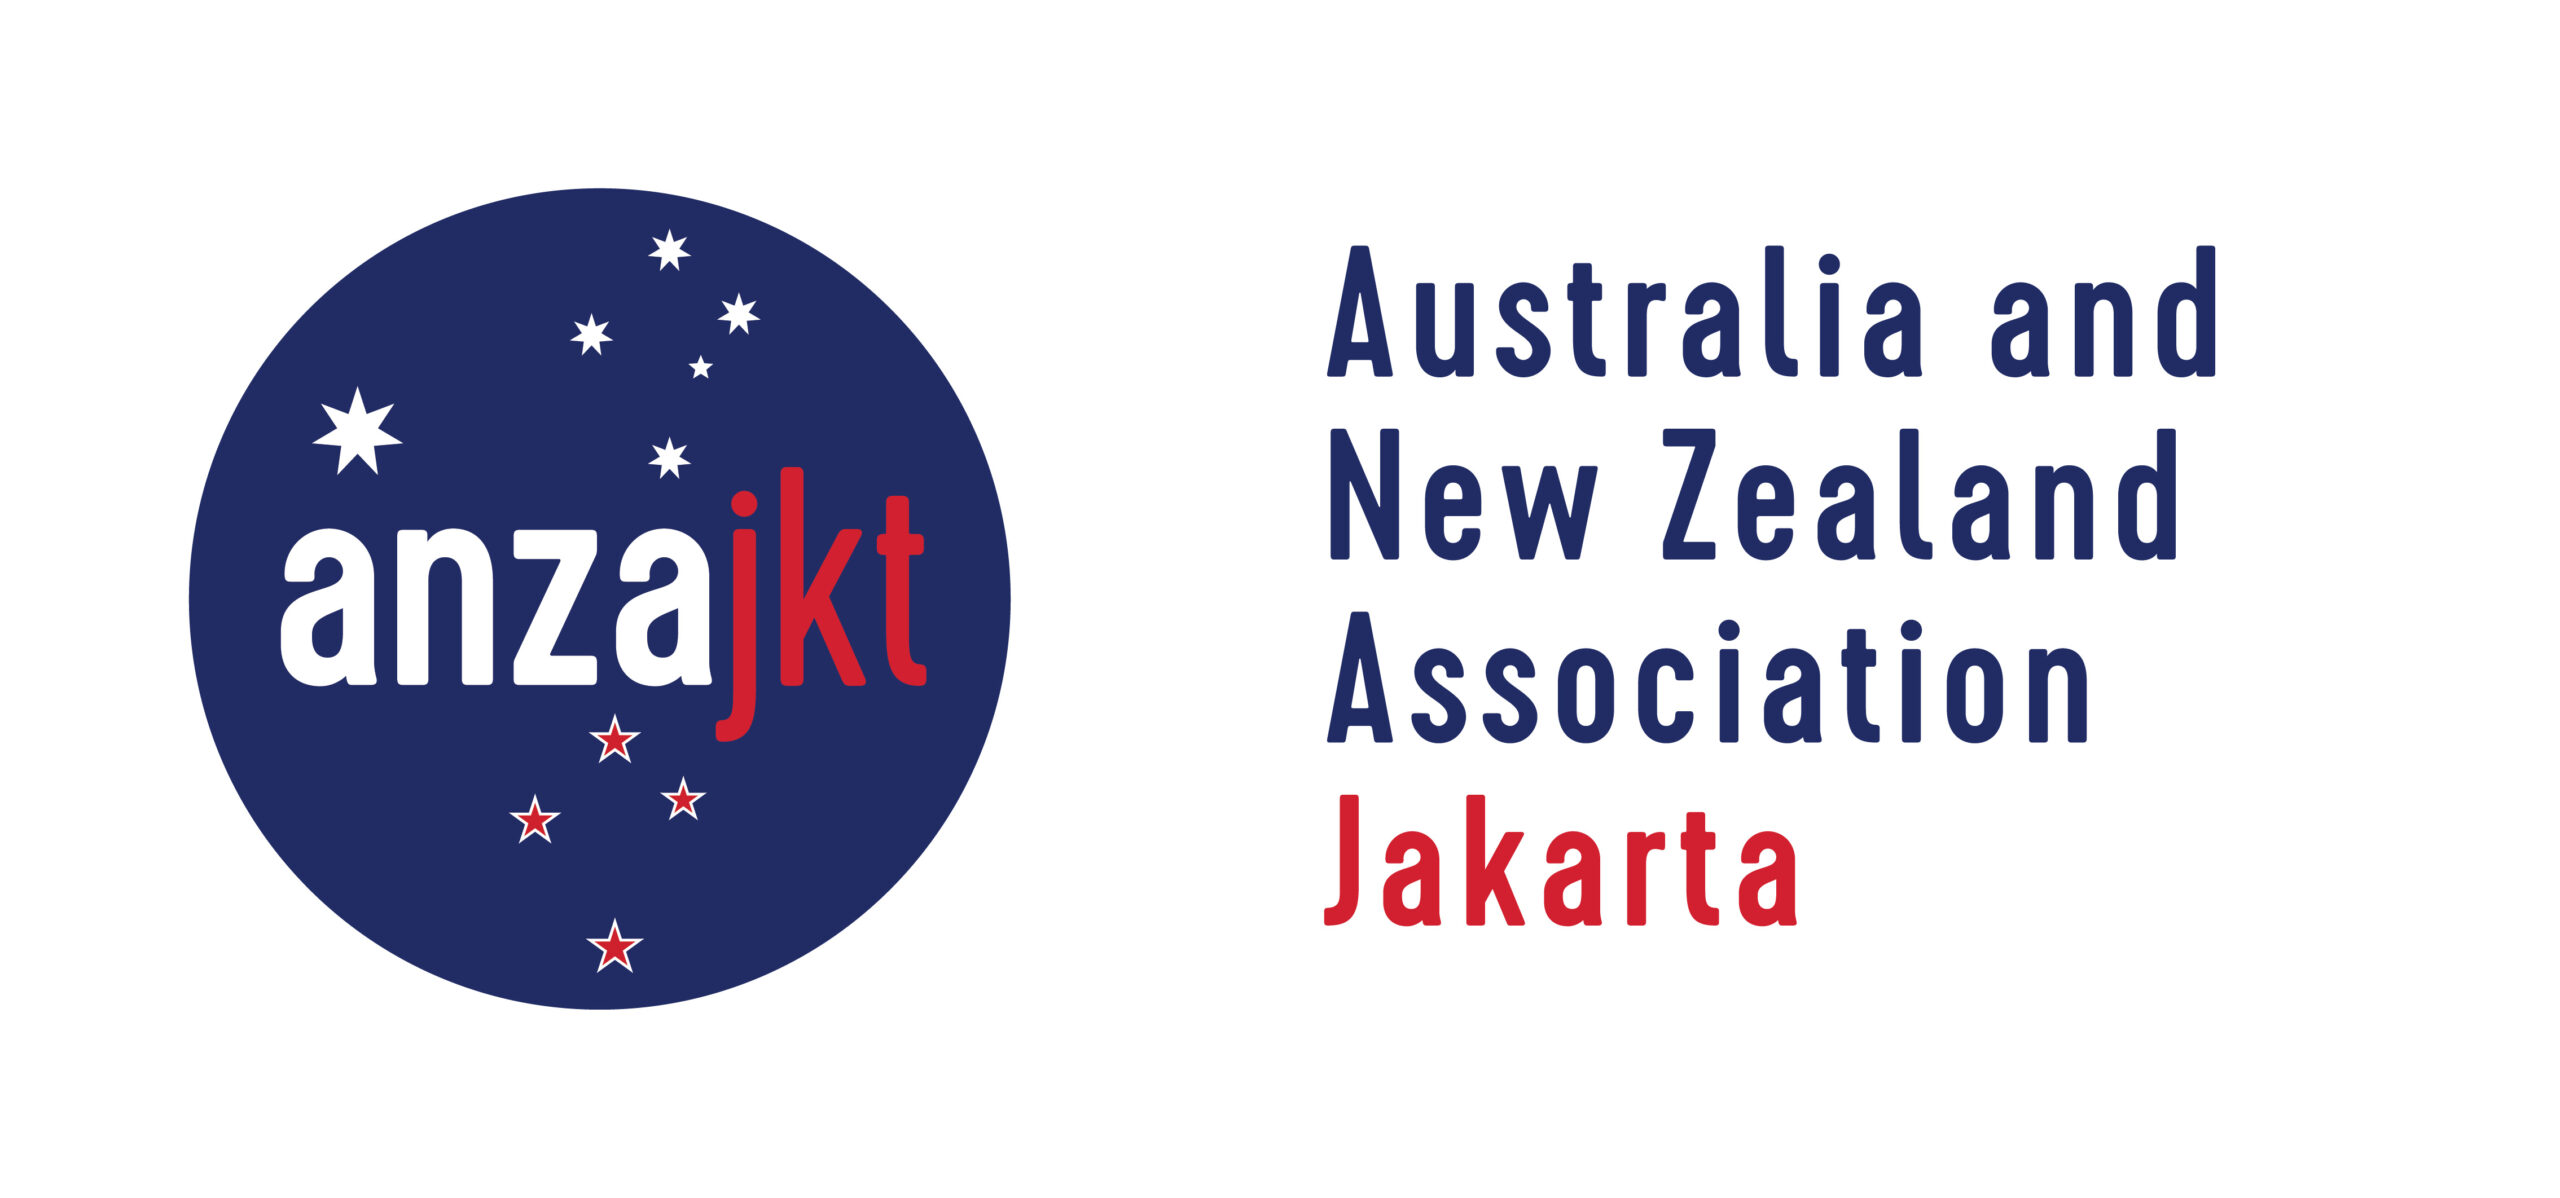 The Australia and New Zealand Association (ANZA)